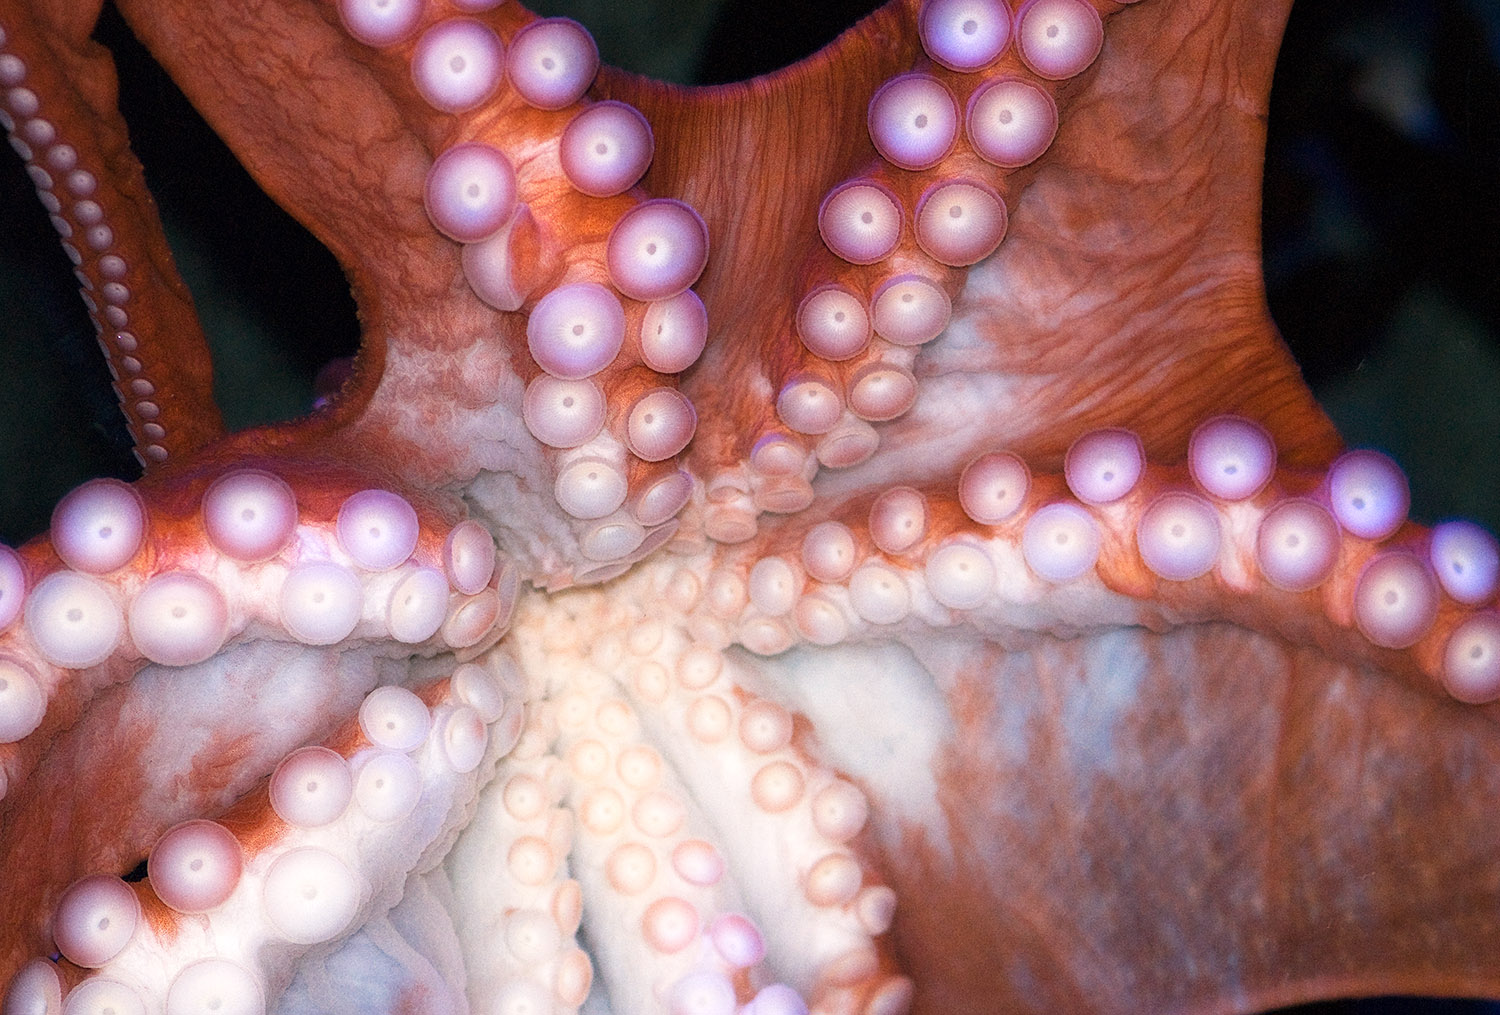 octopus-photo-image-018.jpg